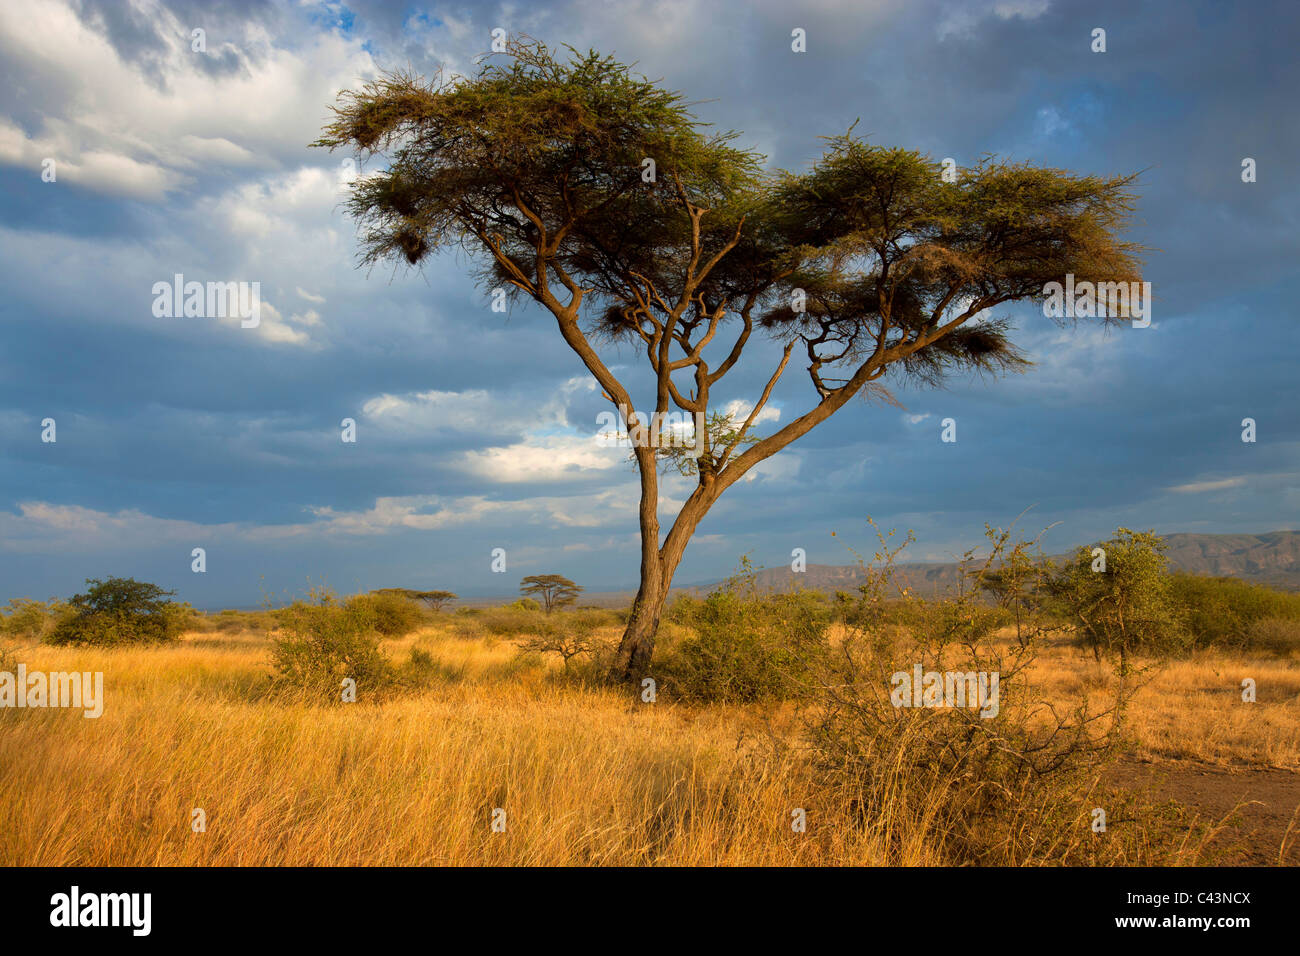 Awash, national park, Africa, Ethiopia, savanna, grass, tree, acacia, clouds, evening light Stock Photo